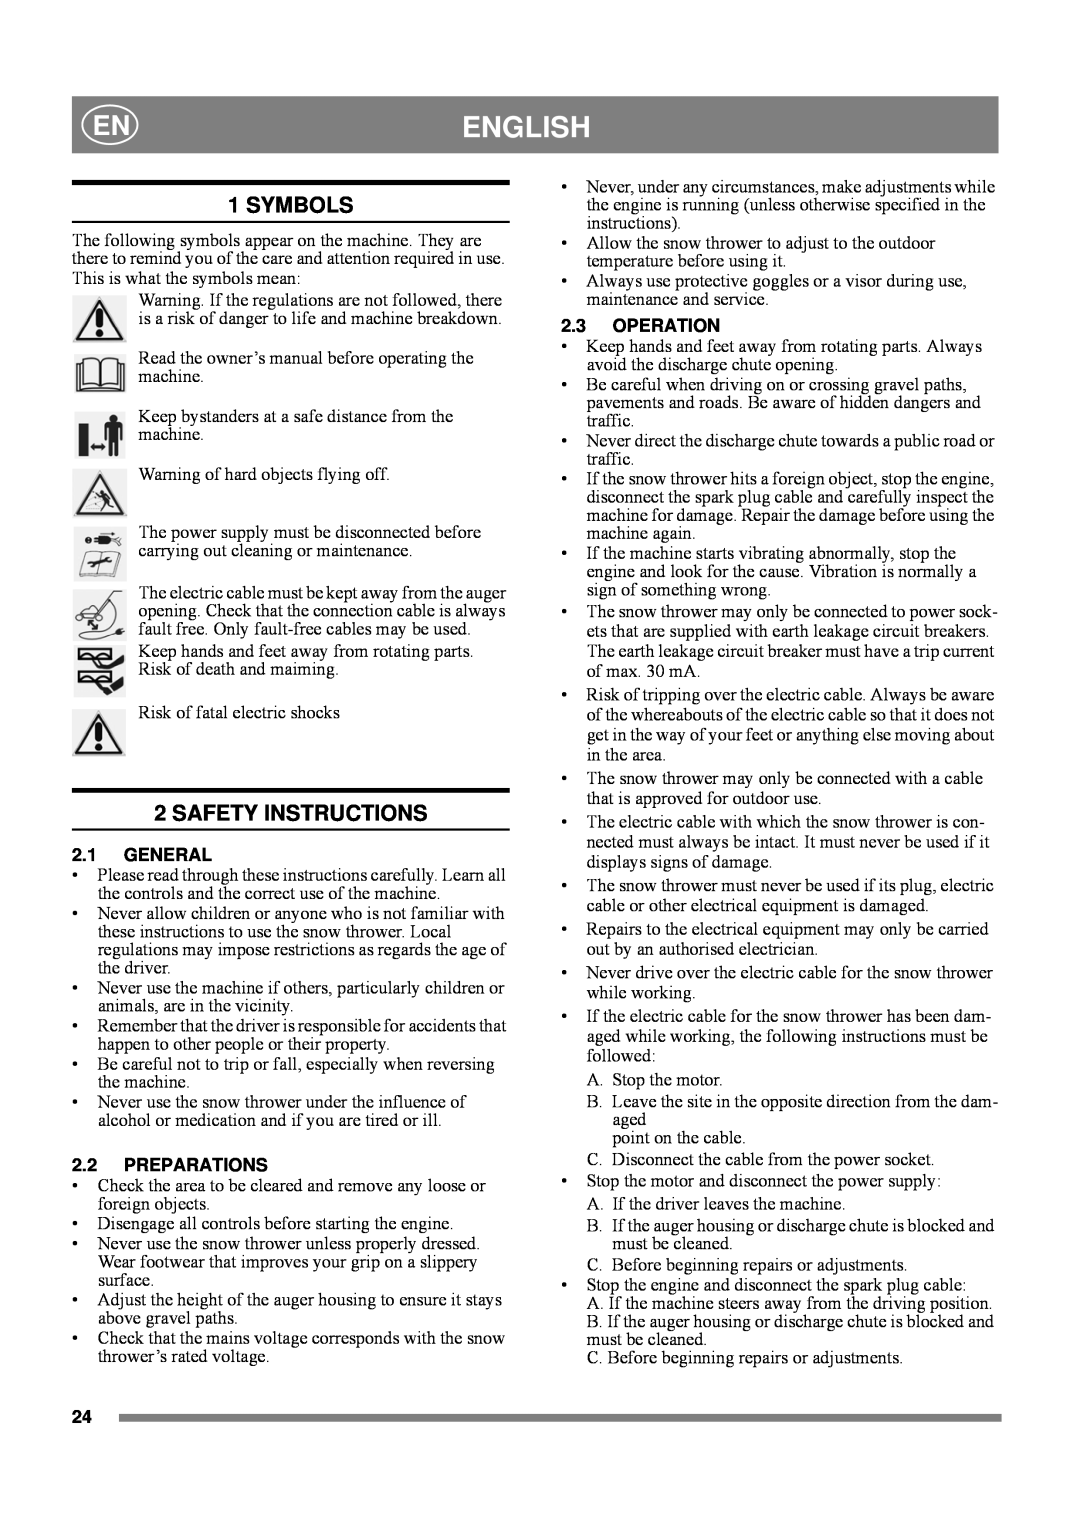 Stiga 8218-2218-70 manual English, Symbols, Safety Instructions, General, Preparations, Operation 